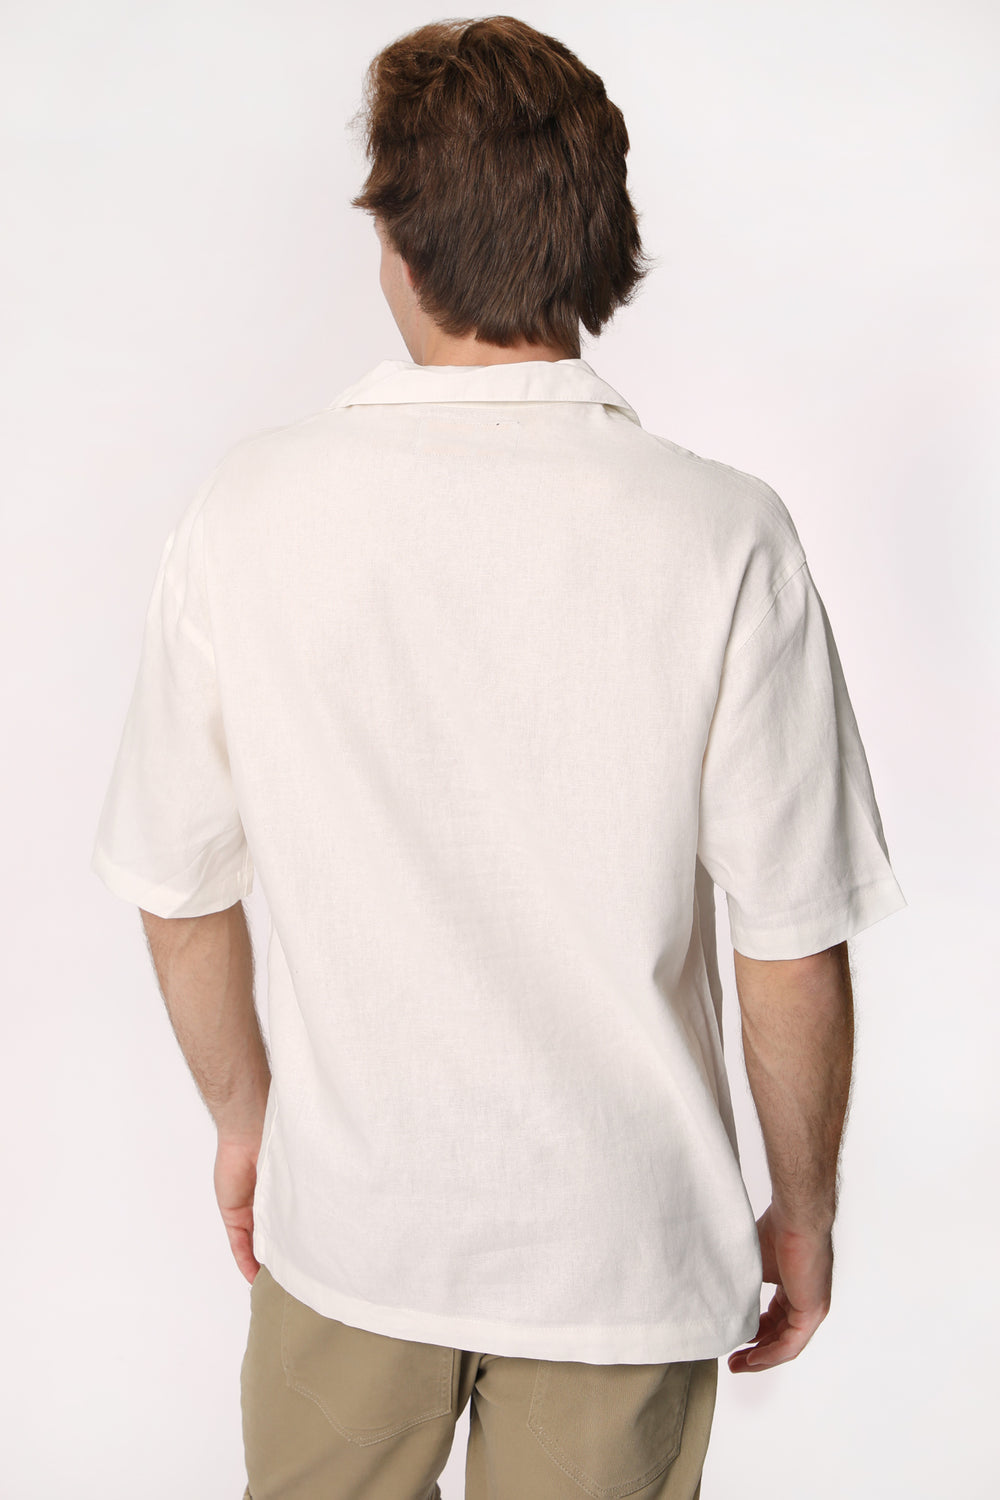 West49 Mens Linen Button-Up White